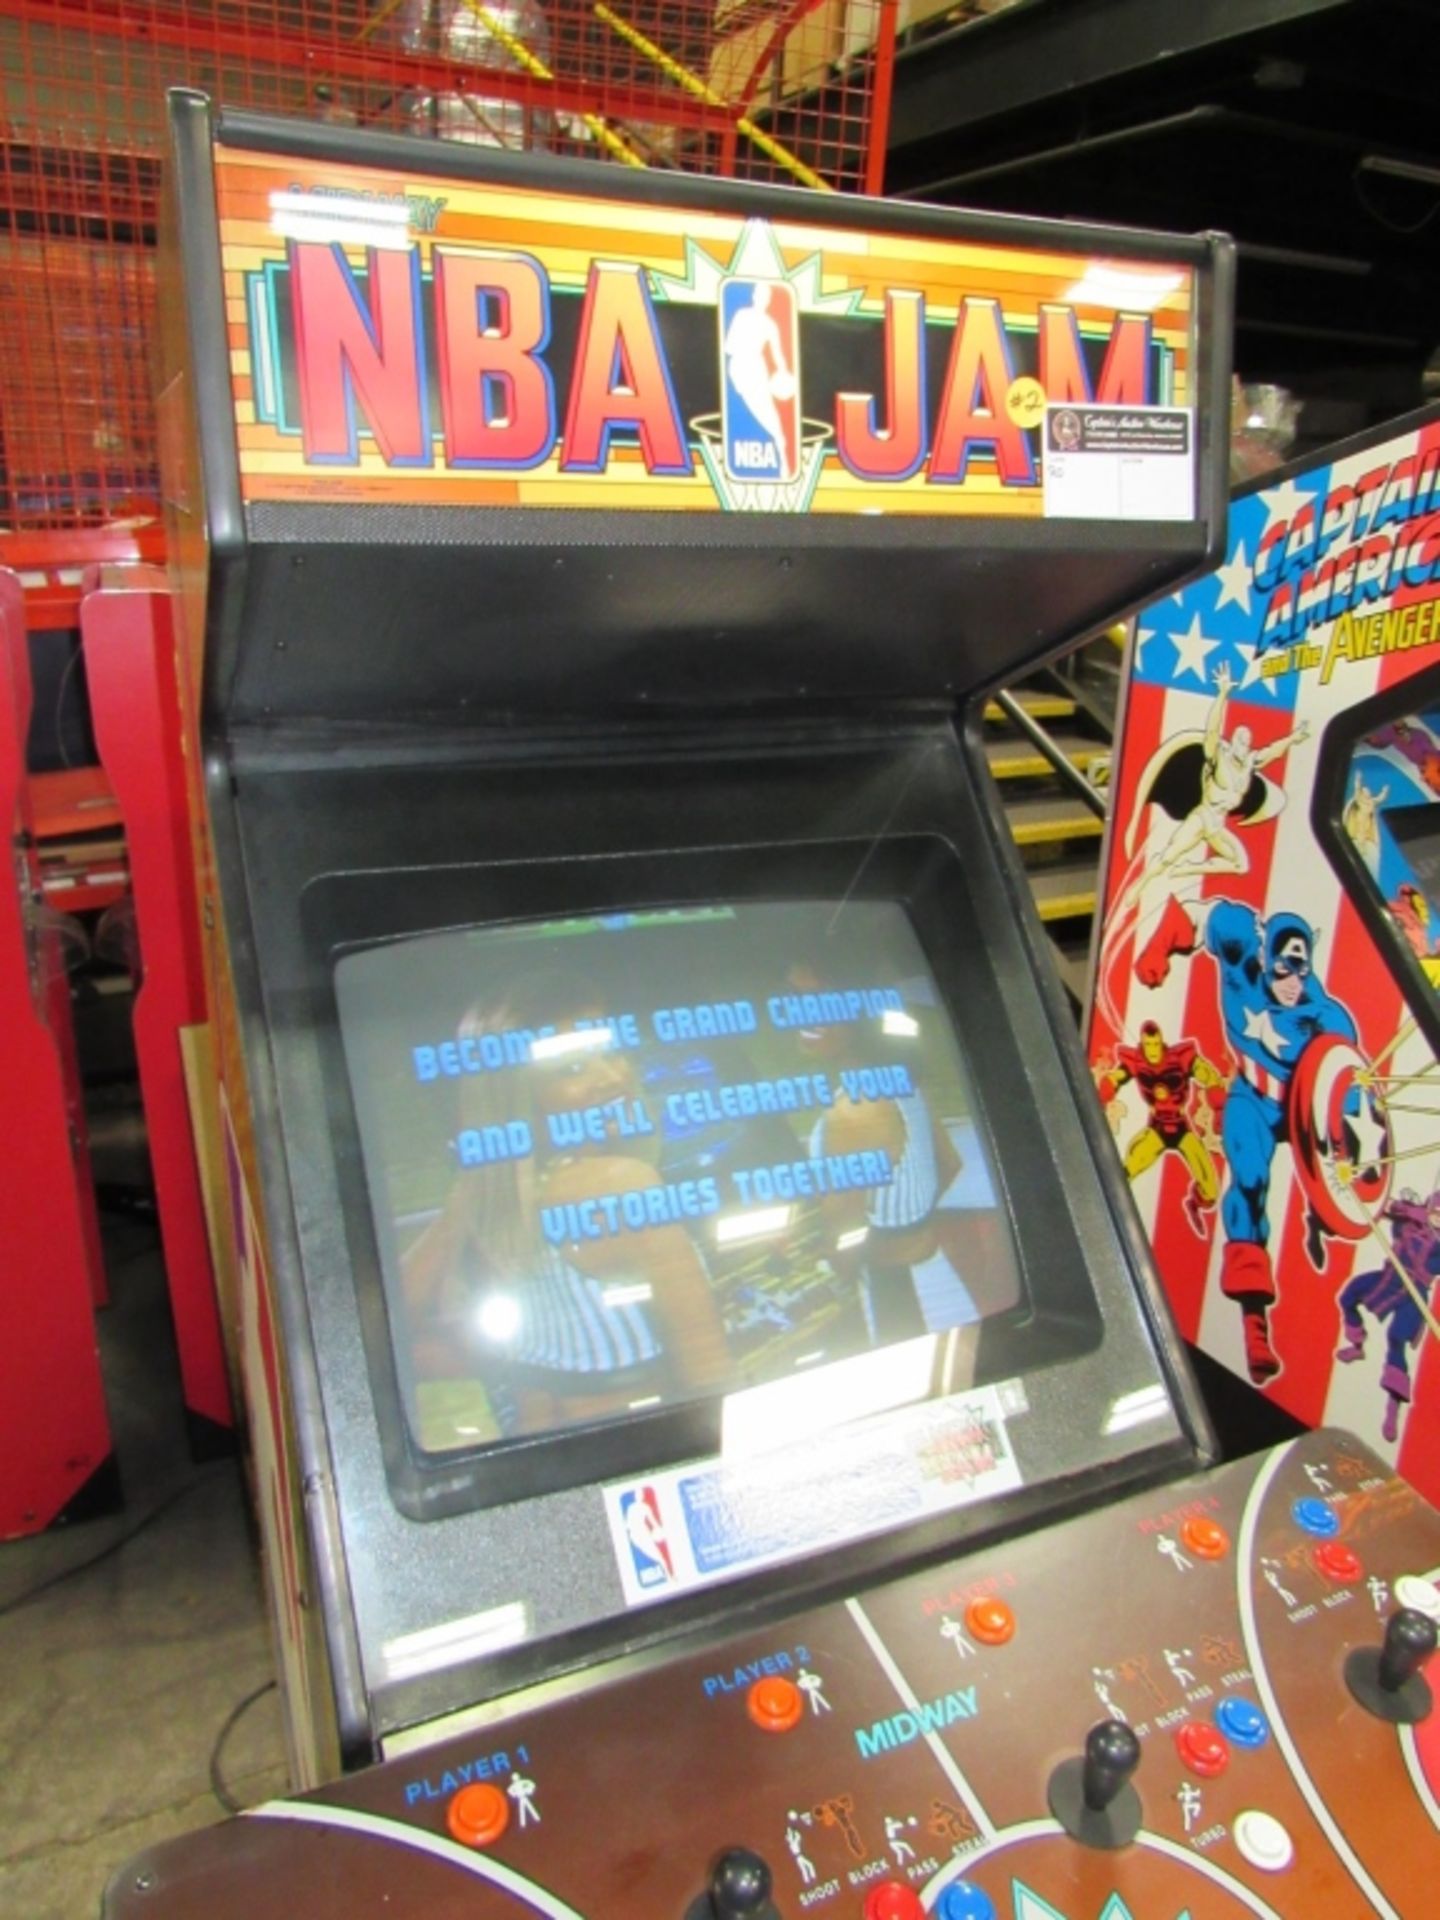 NBA JAM CLASSIC BASKETBALL MIDWAY ARCADE GAME #2 - Image 2 of 4